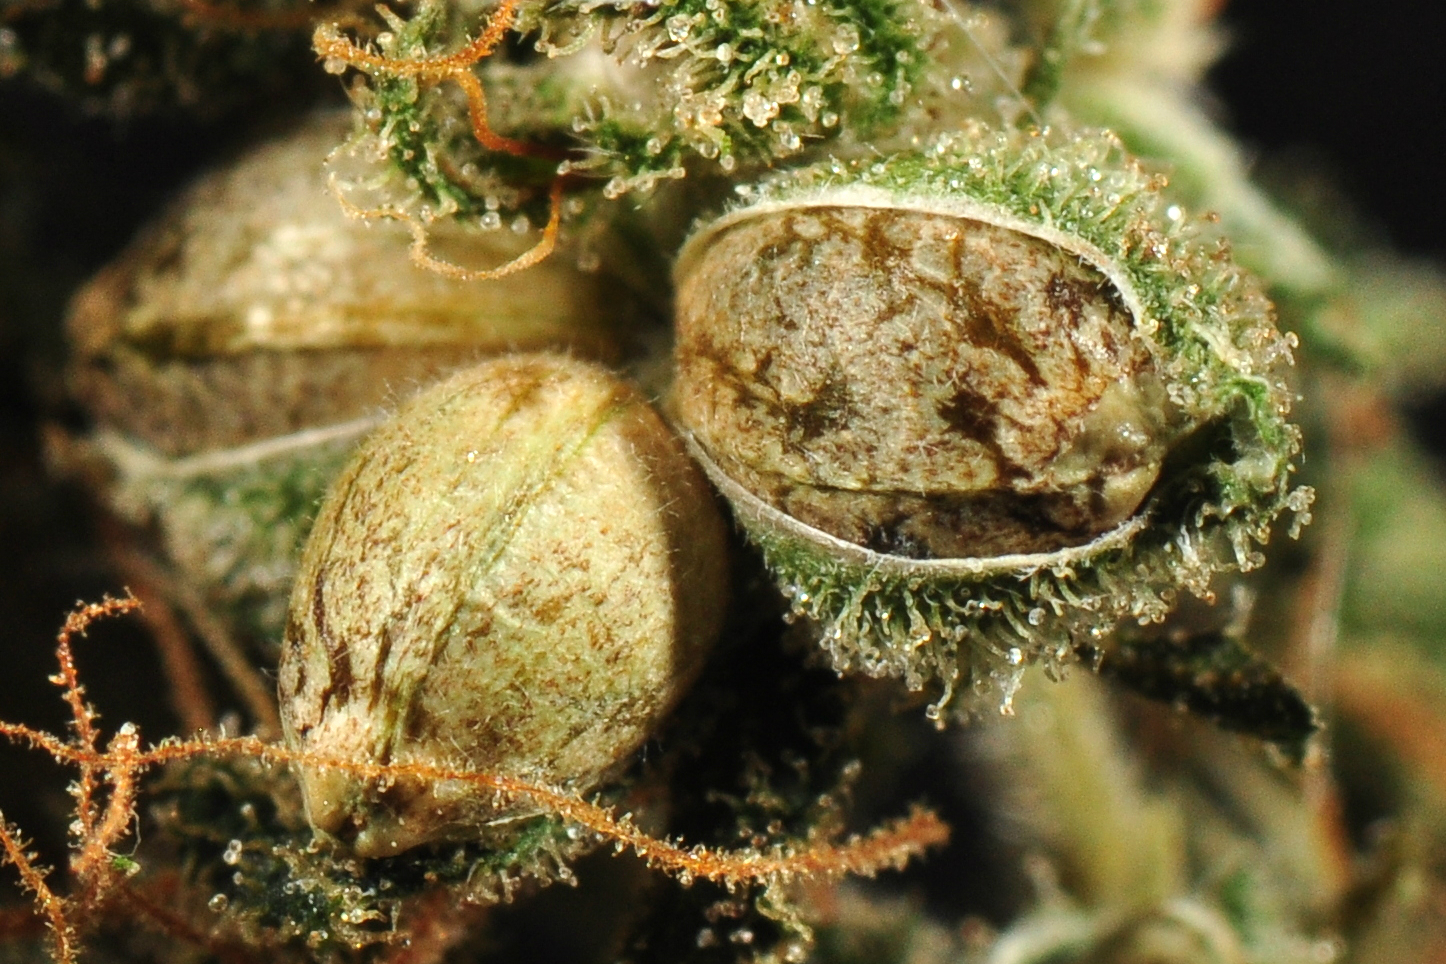 Female cannabis seeds vs male